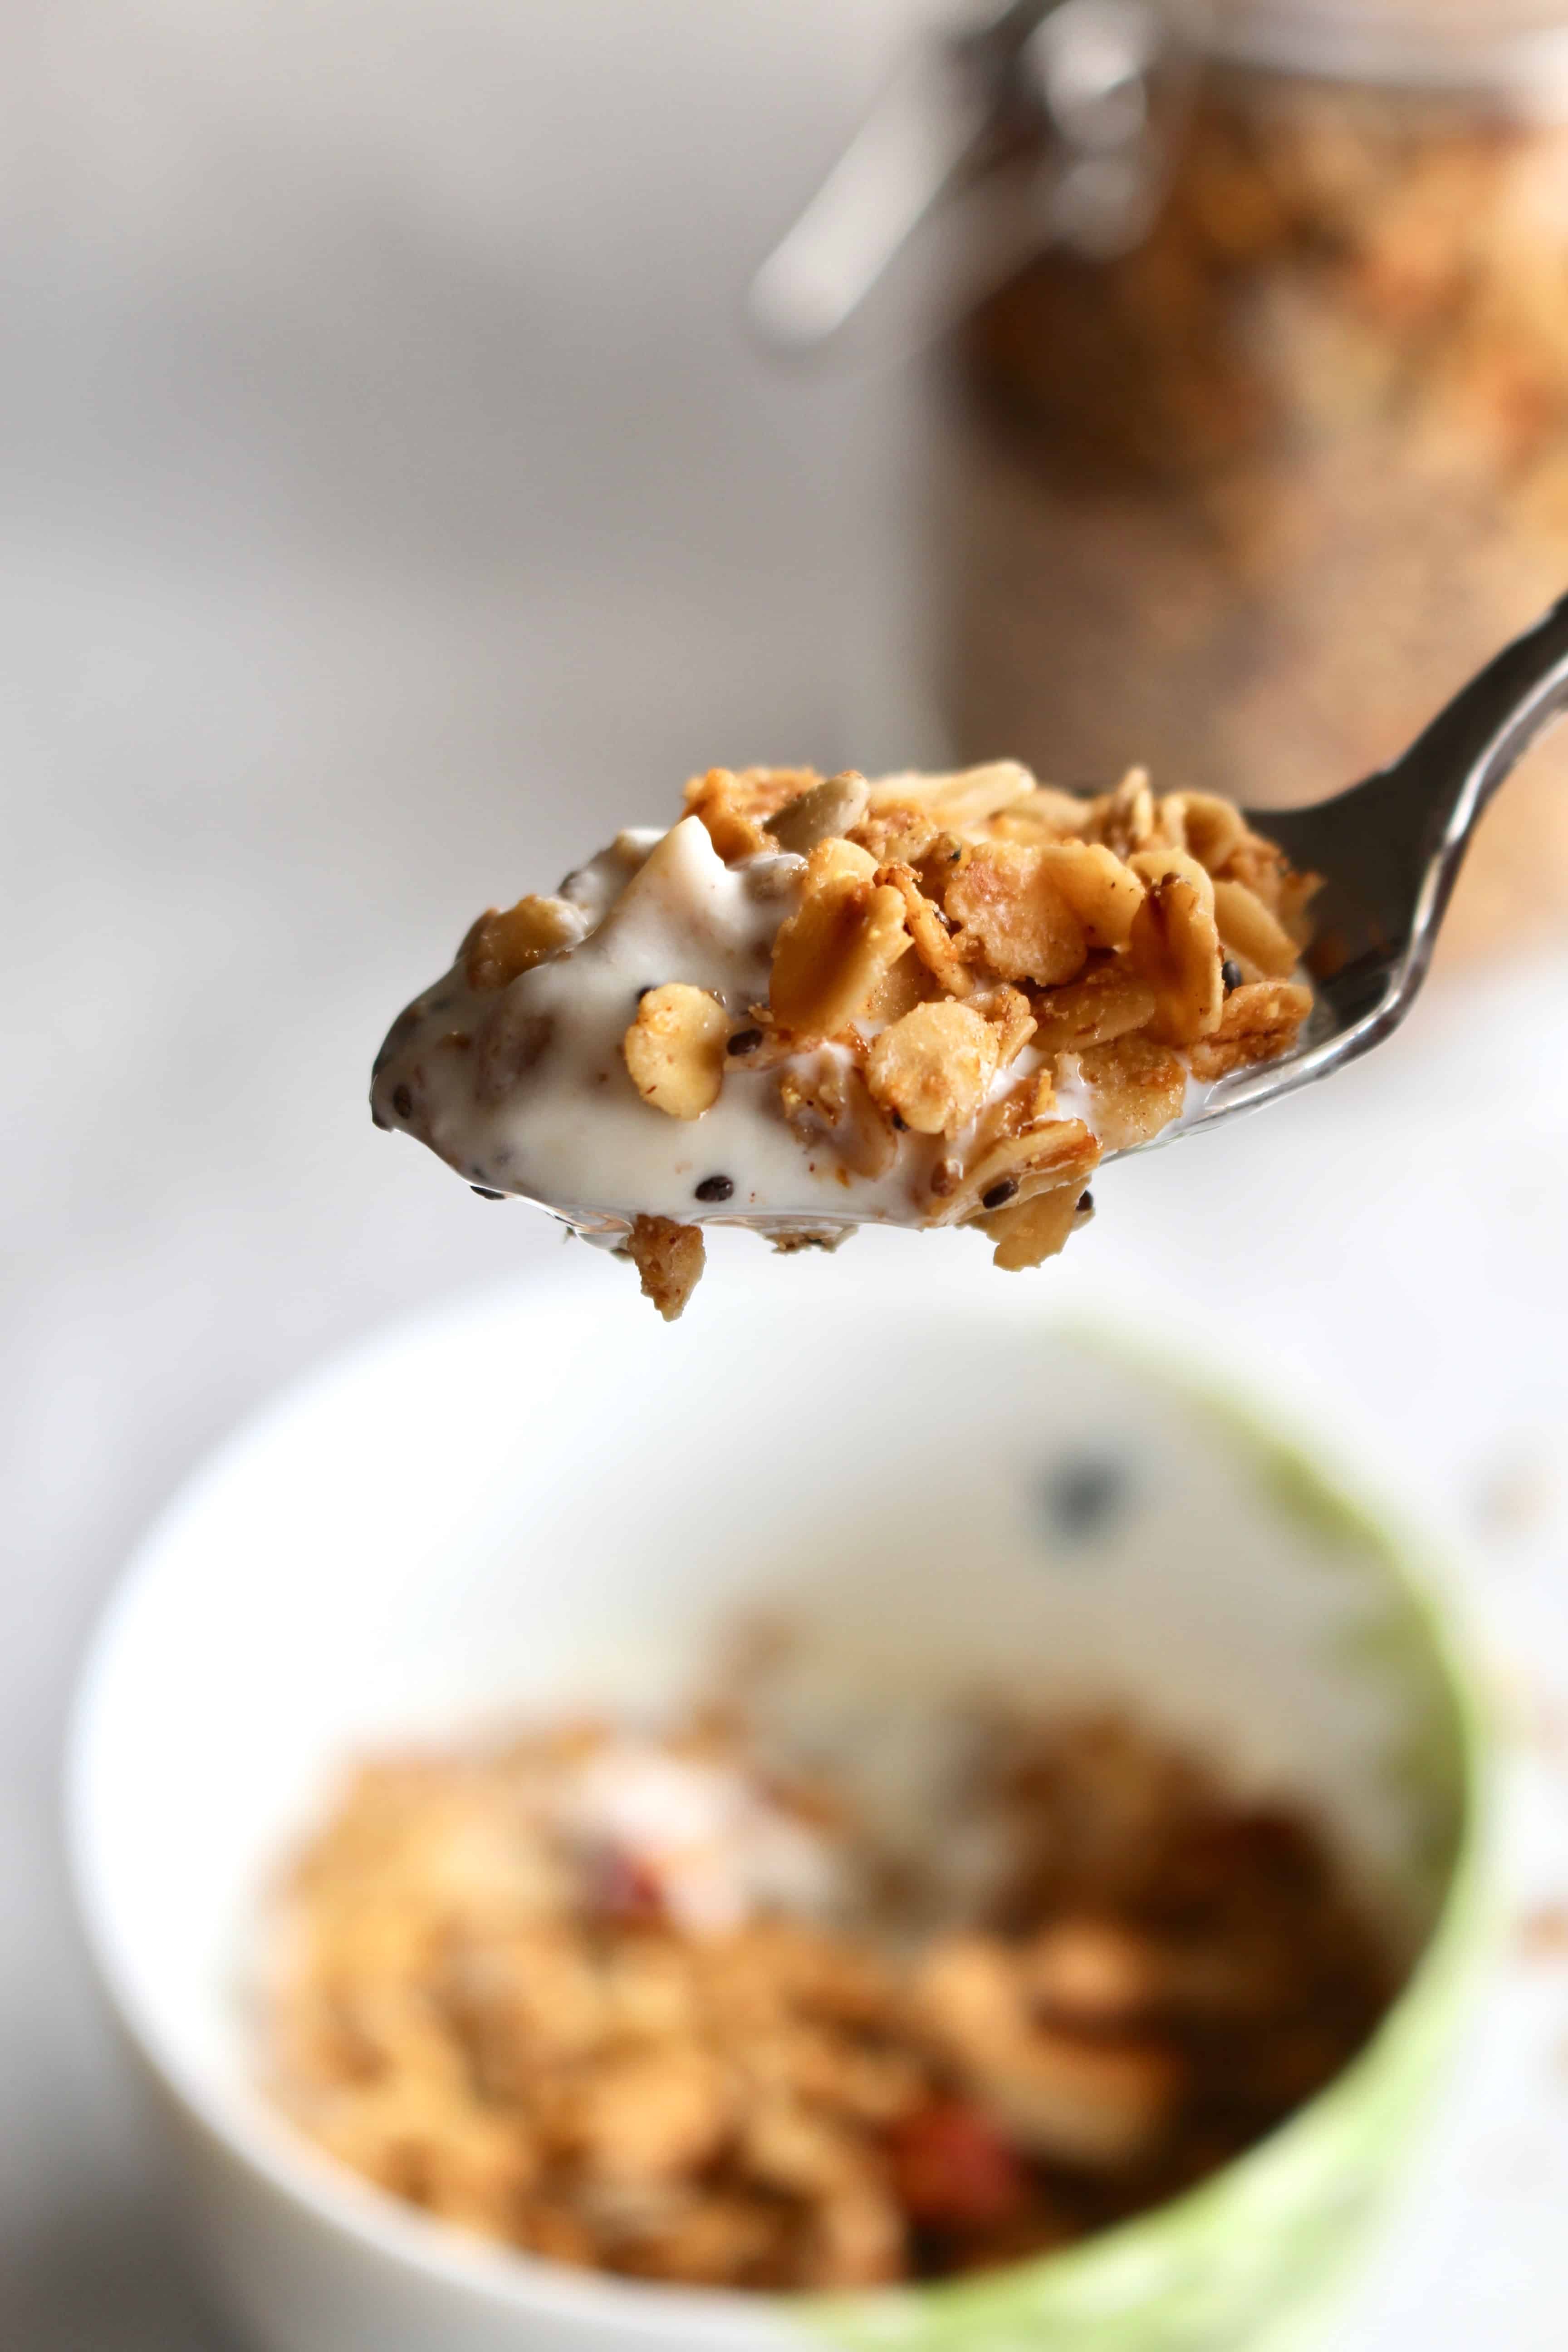 A spoonful of homemade granola and yogurt.